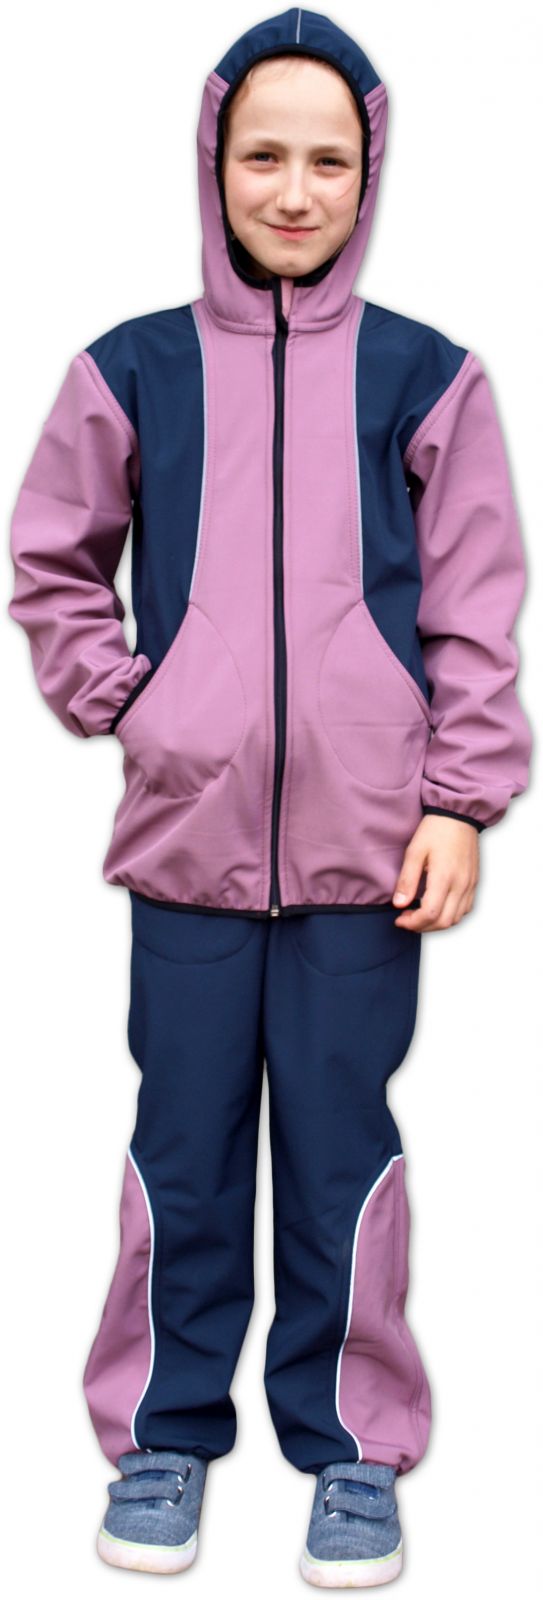 Softshell Jacke für Kinder, rosa/dunkelblau, Gr. 86/92